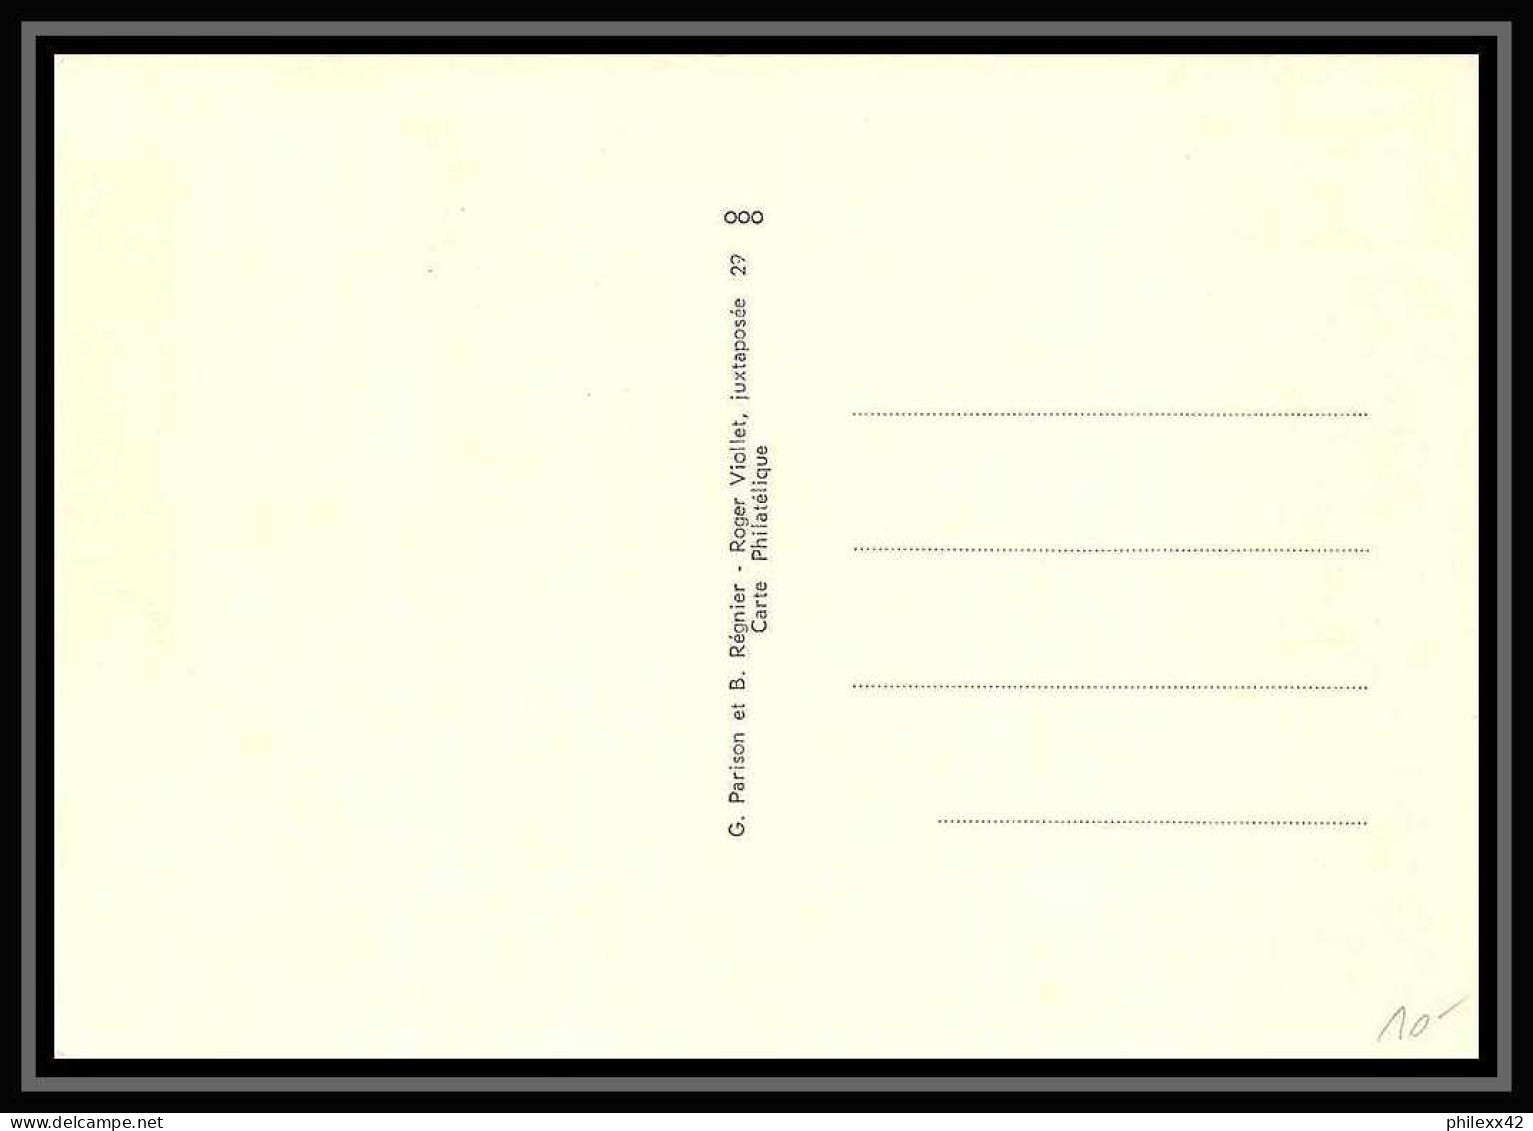 2360/ Carte Maximum France N°1600 Organisation Internationale Du Travail OIT ALBERT THOMAS Edition Parison 1969 - IAO